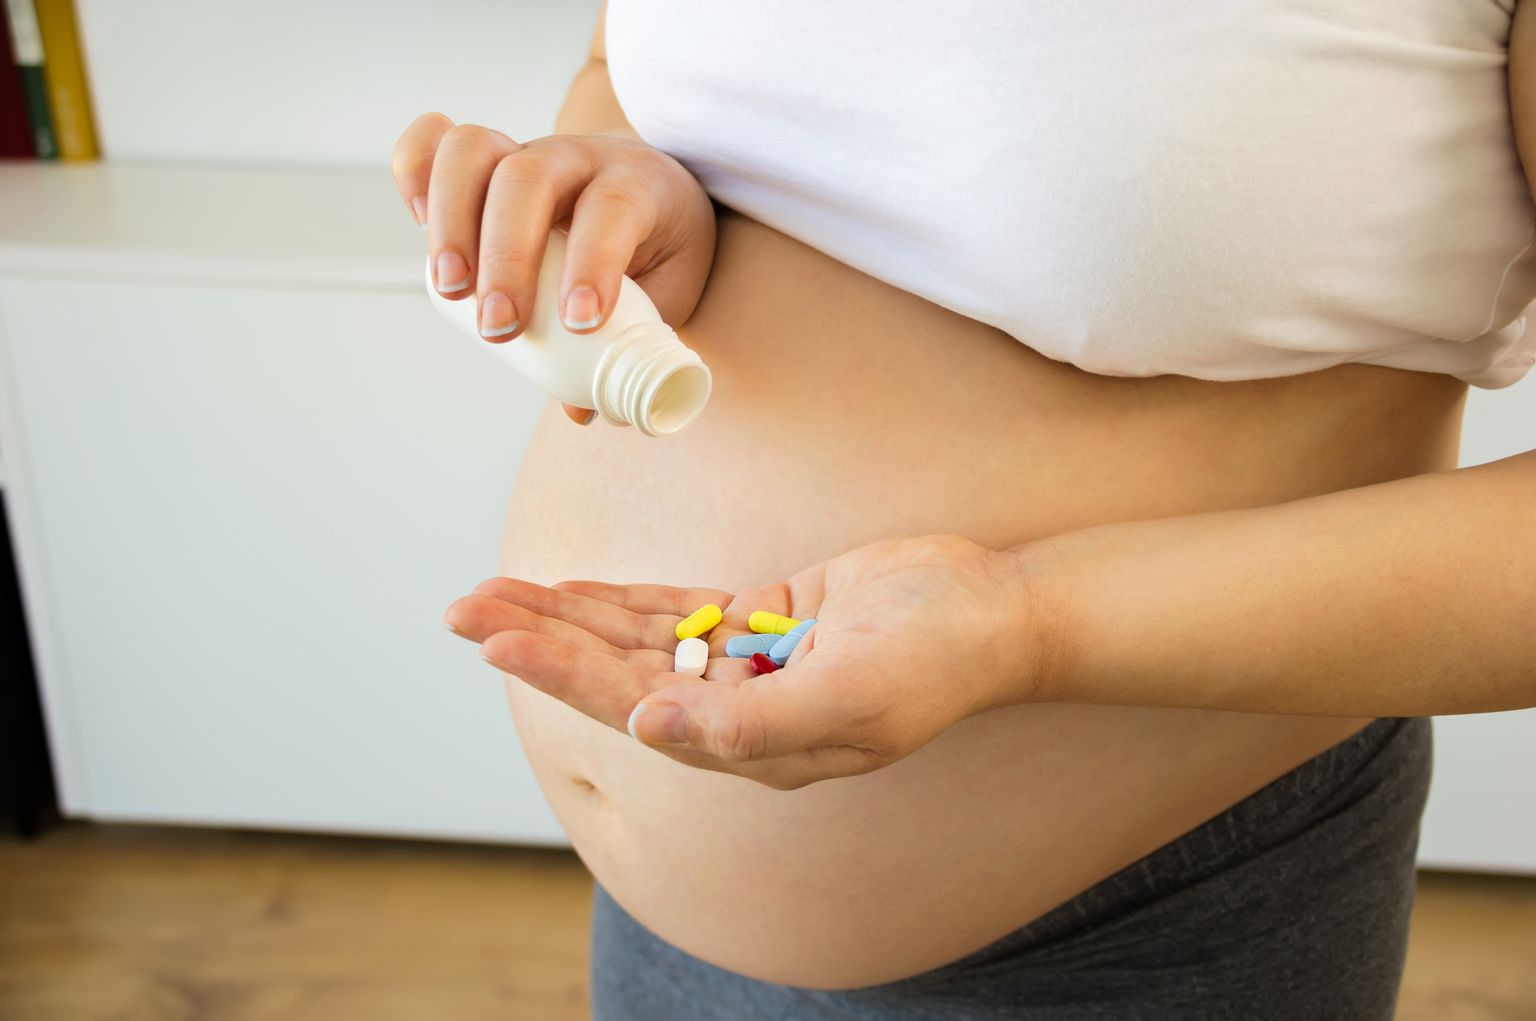 Taking medication during pregnancy